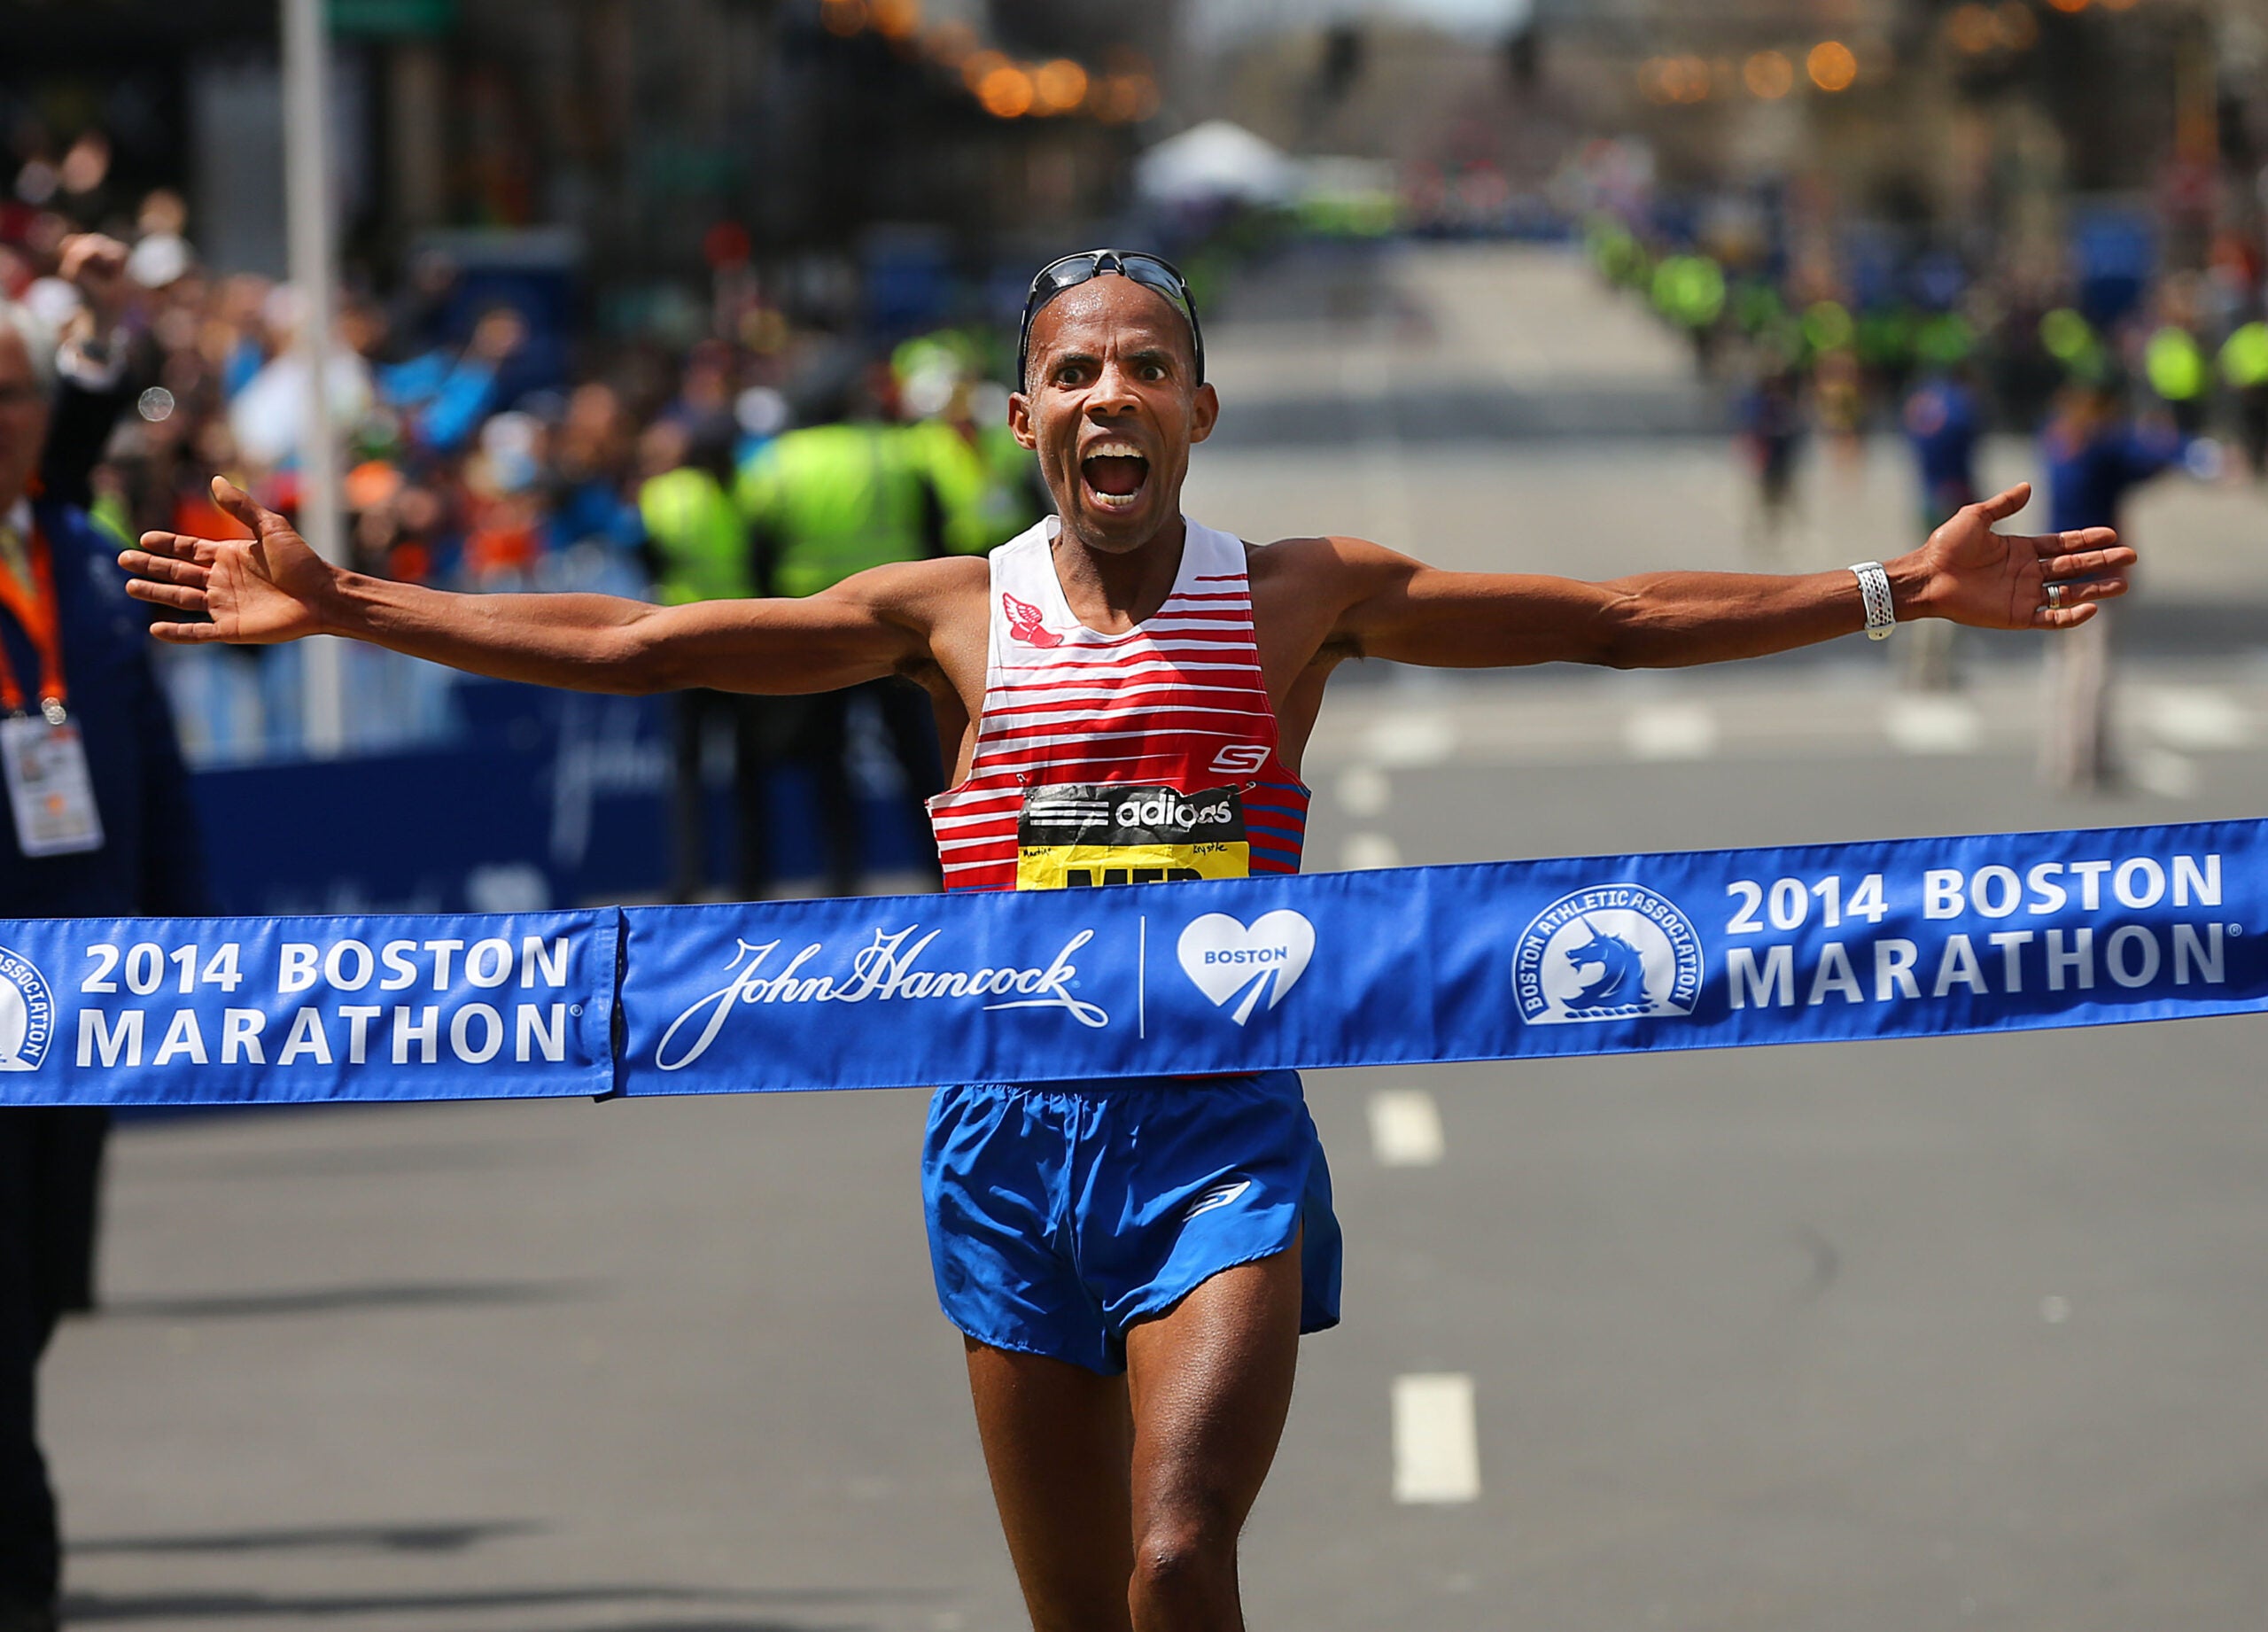 Why is a marathon 26.2 miles?